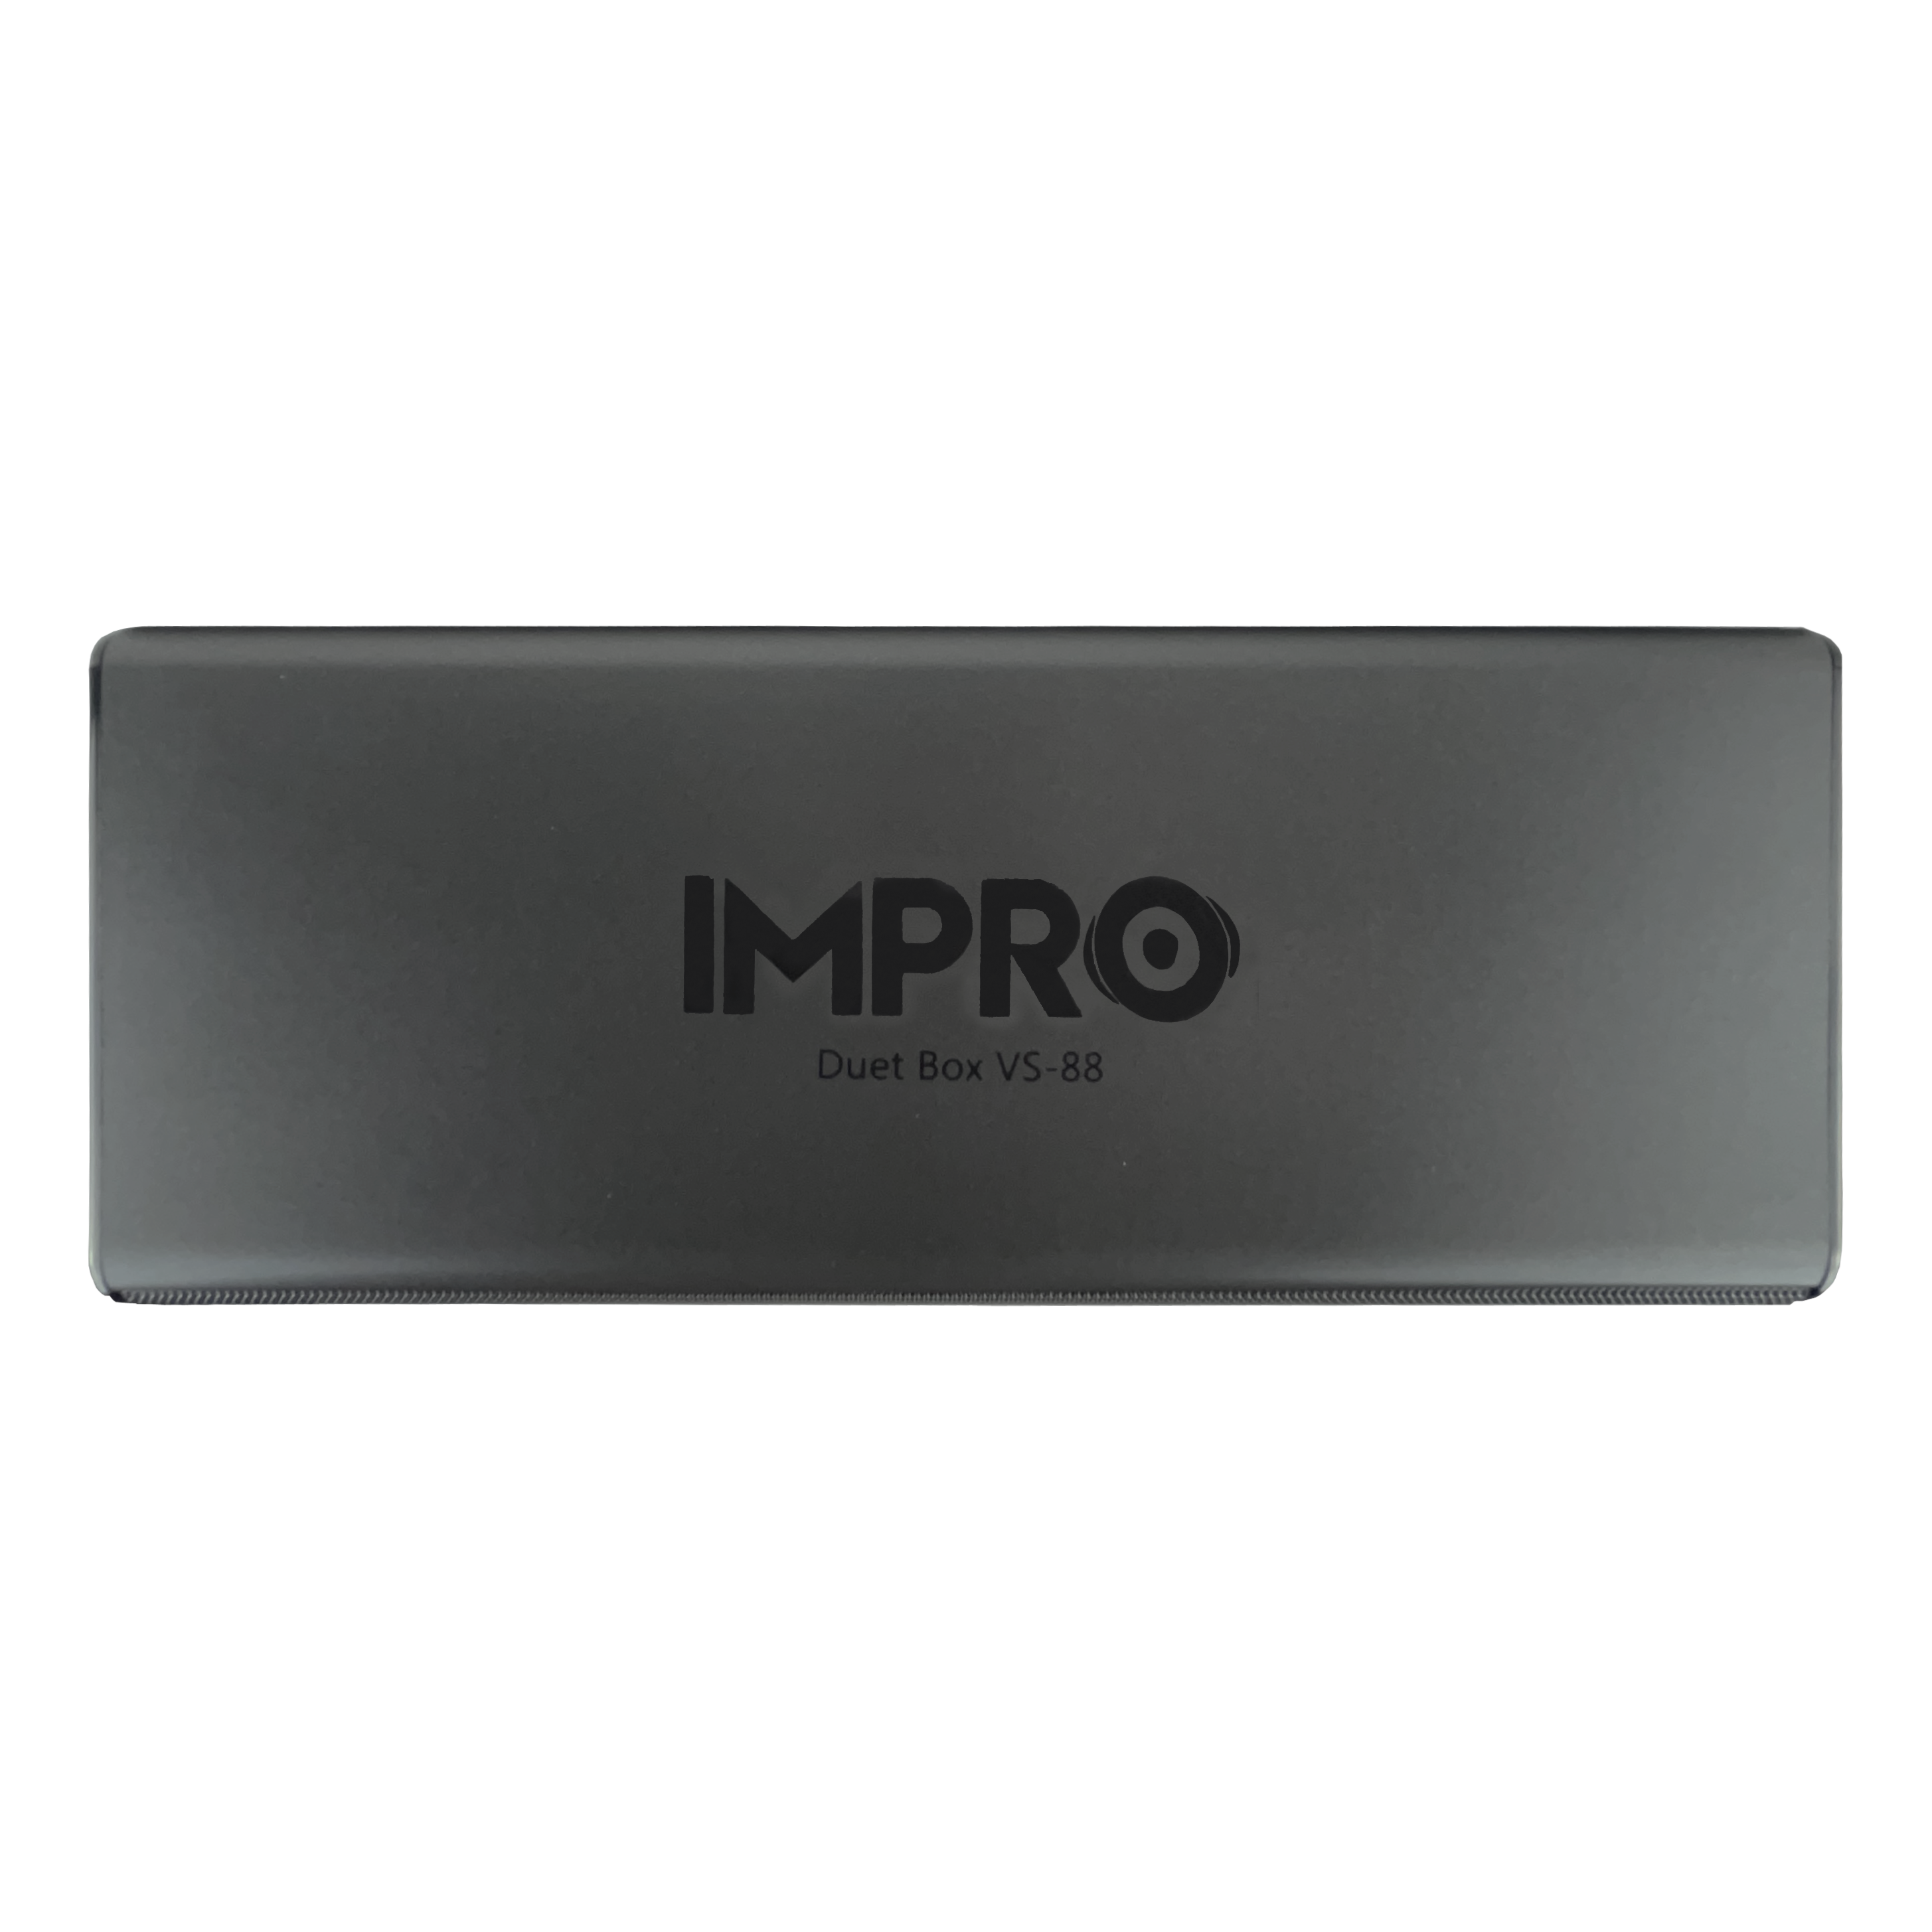 ImPro VS-88 Duet Box Portable Bluetooth Speaker